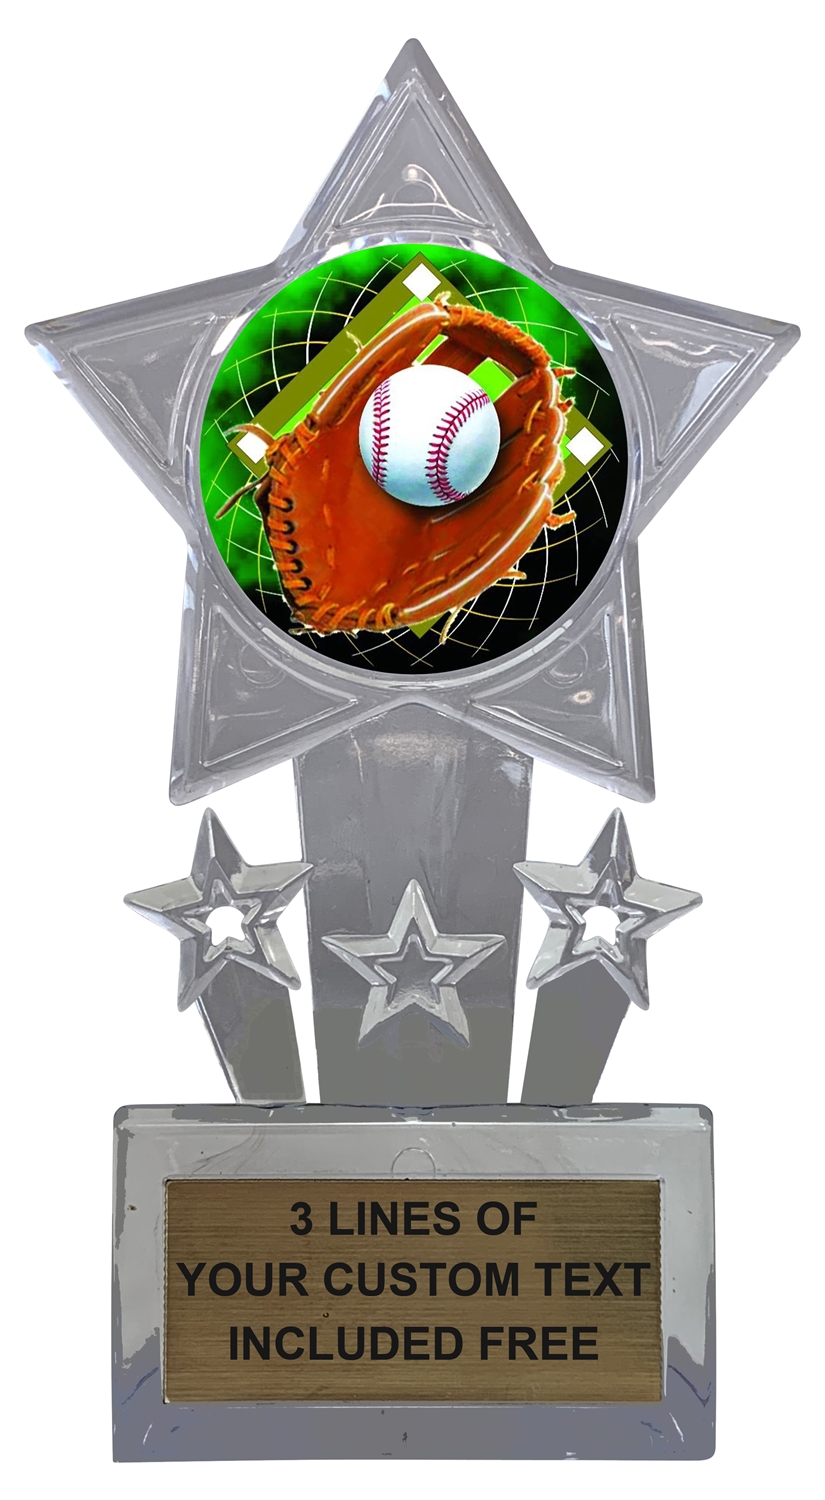 Baseball Trophy Cup